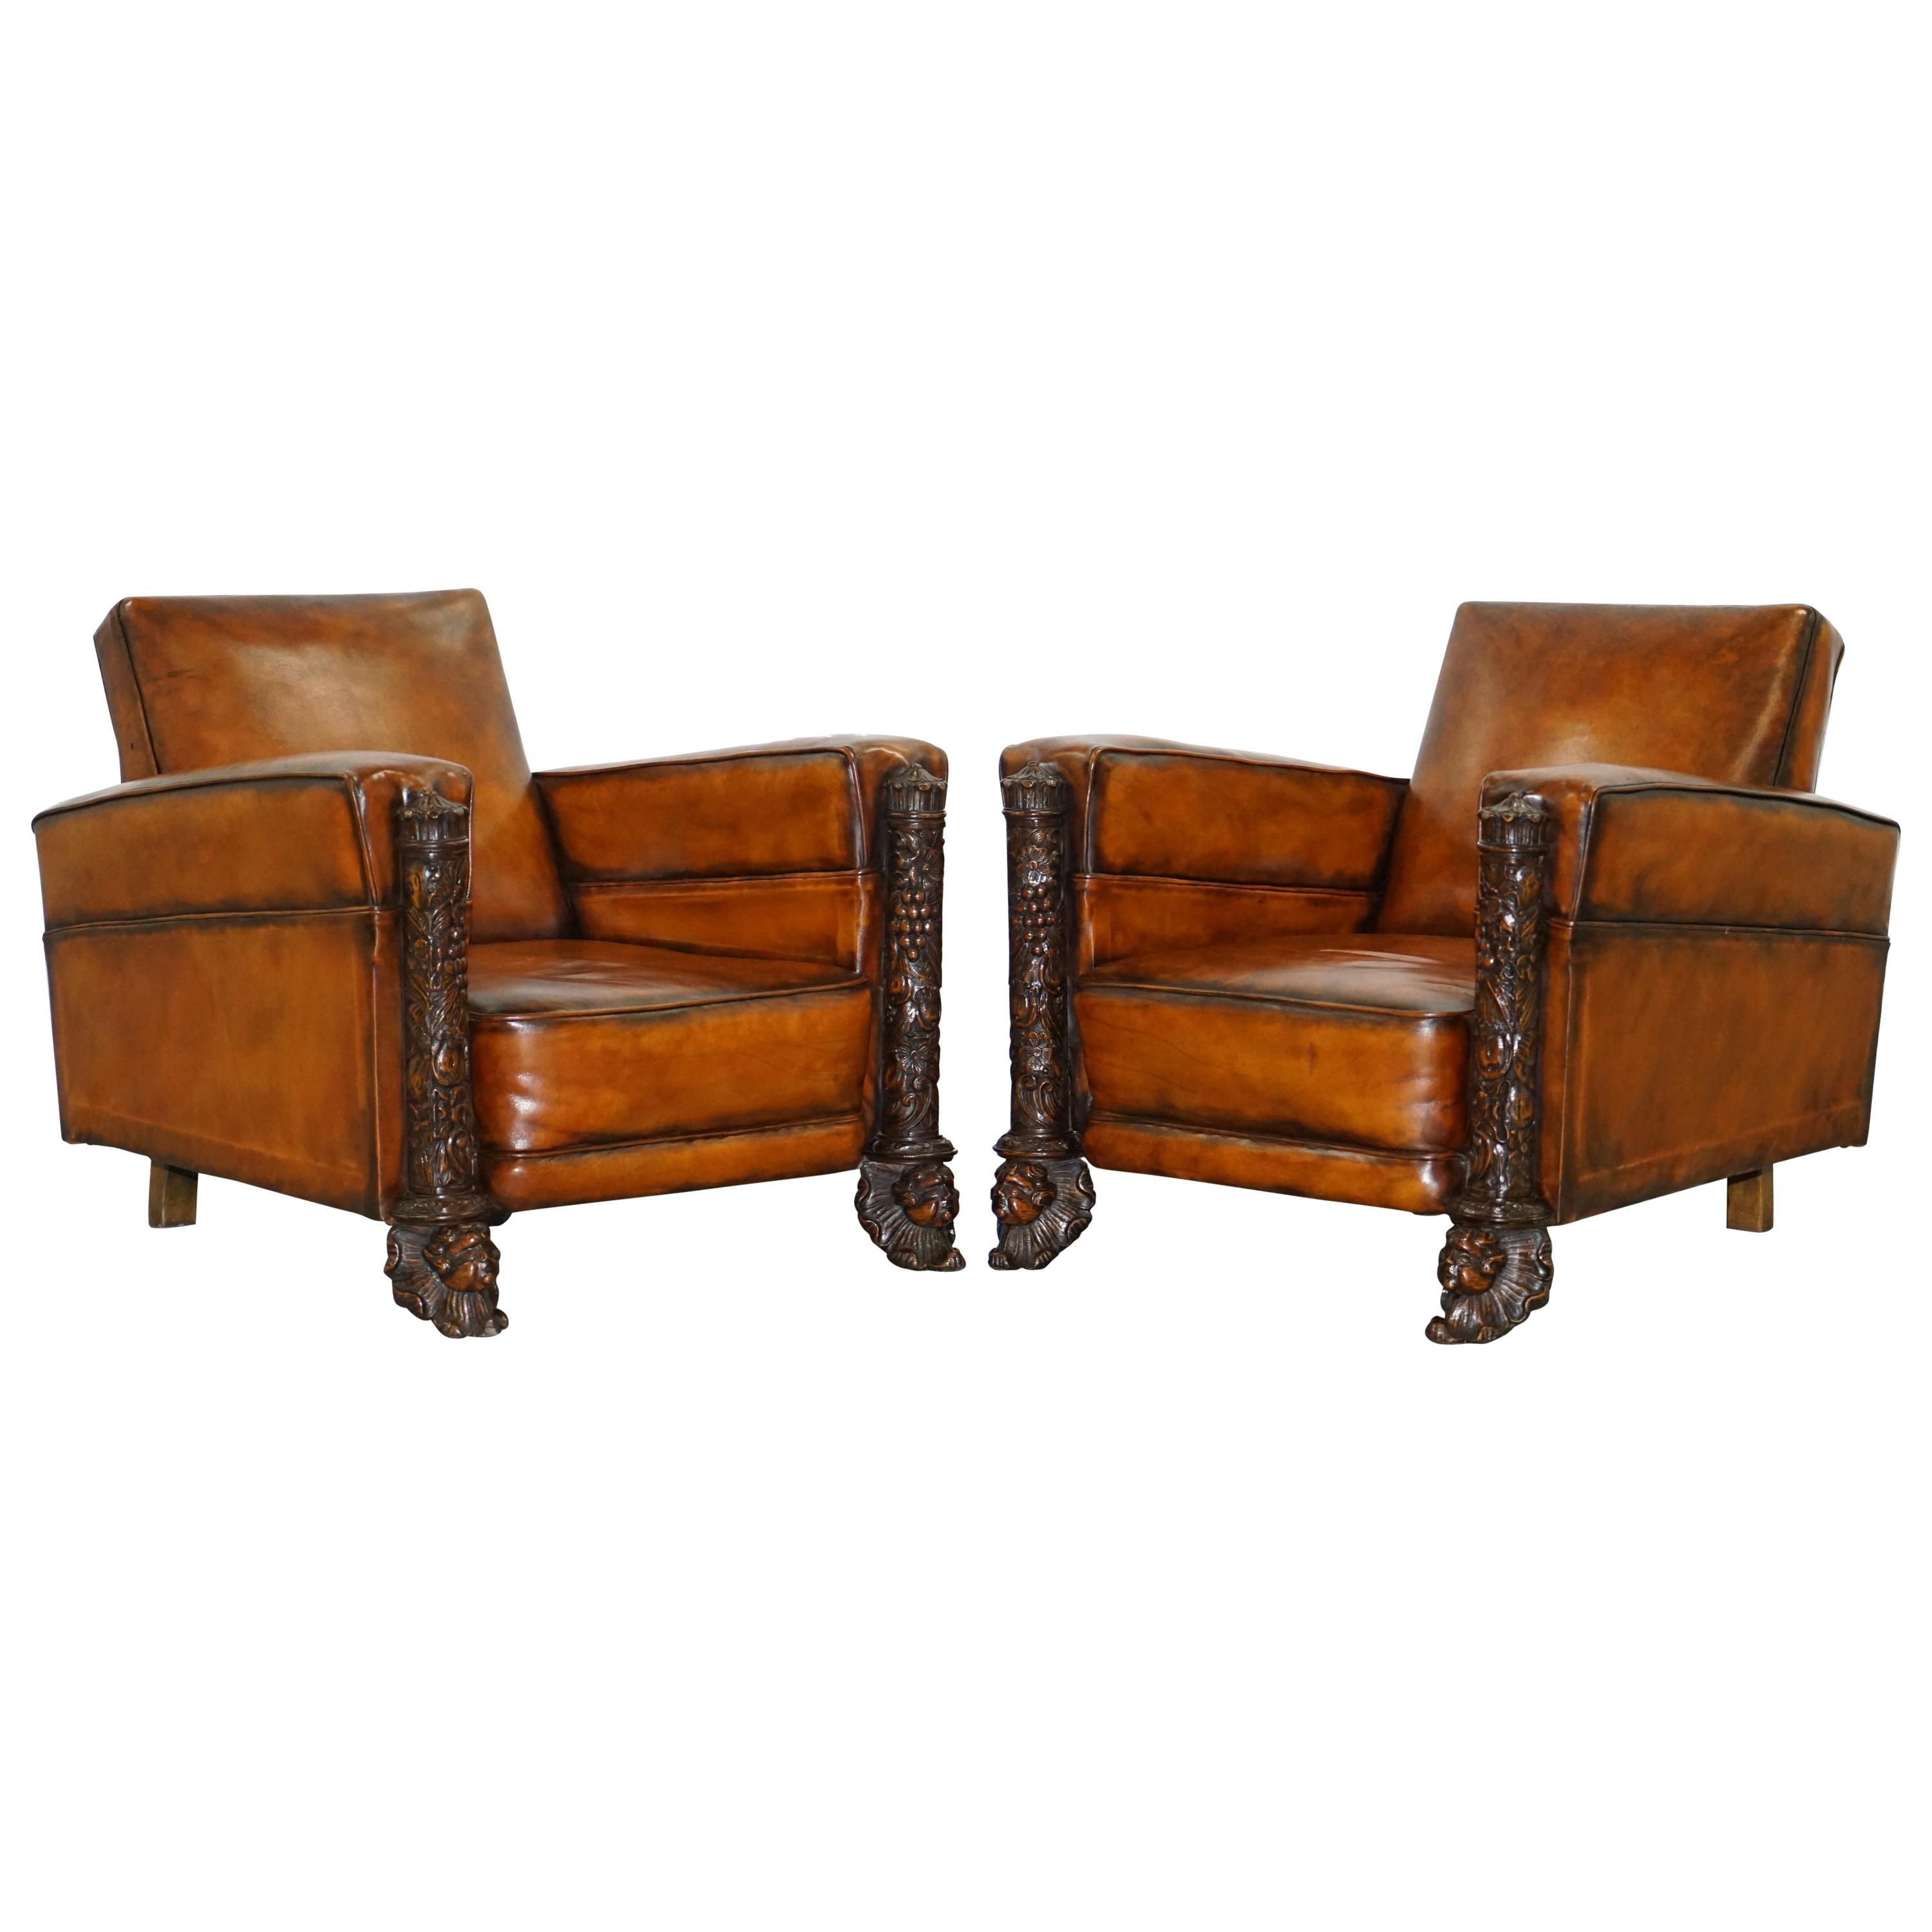 Pair of Victorian Brown Leather Club Armchairs 17th Century Cherub Putti Angels